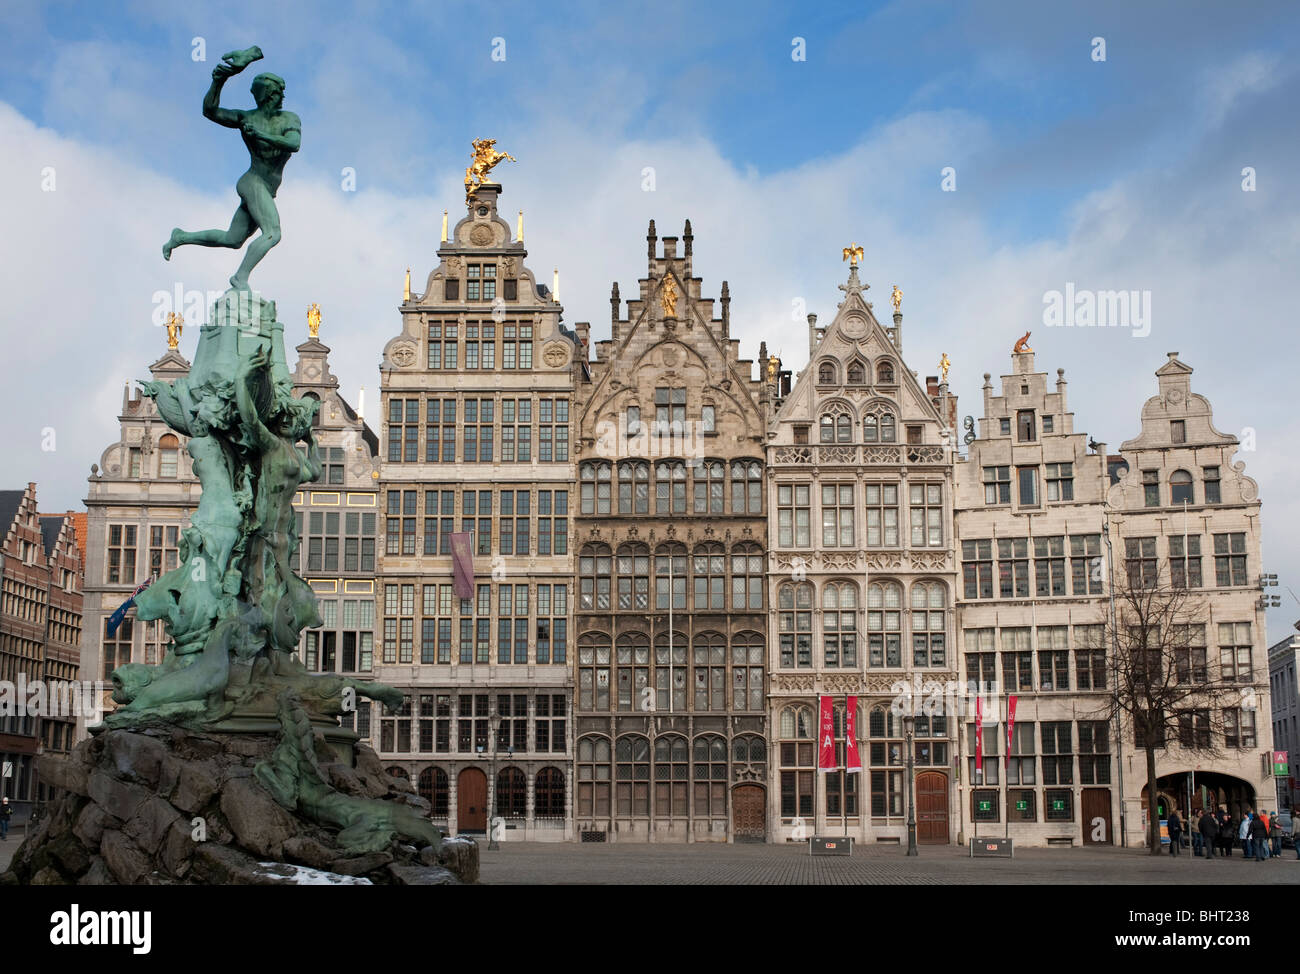 Antwerp; Brabo Fountain and historic buildings in Grote Markt square in Antwerp Belgium Stock Photo